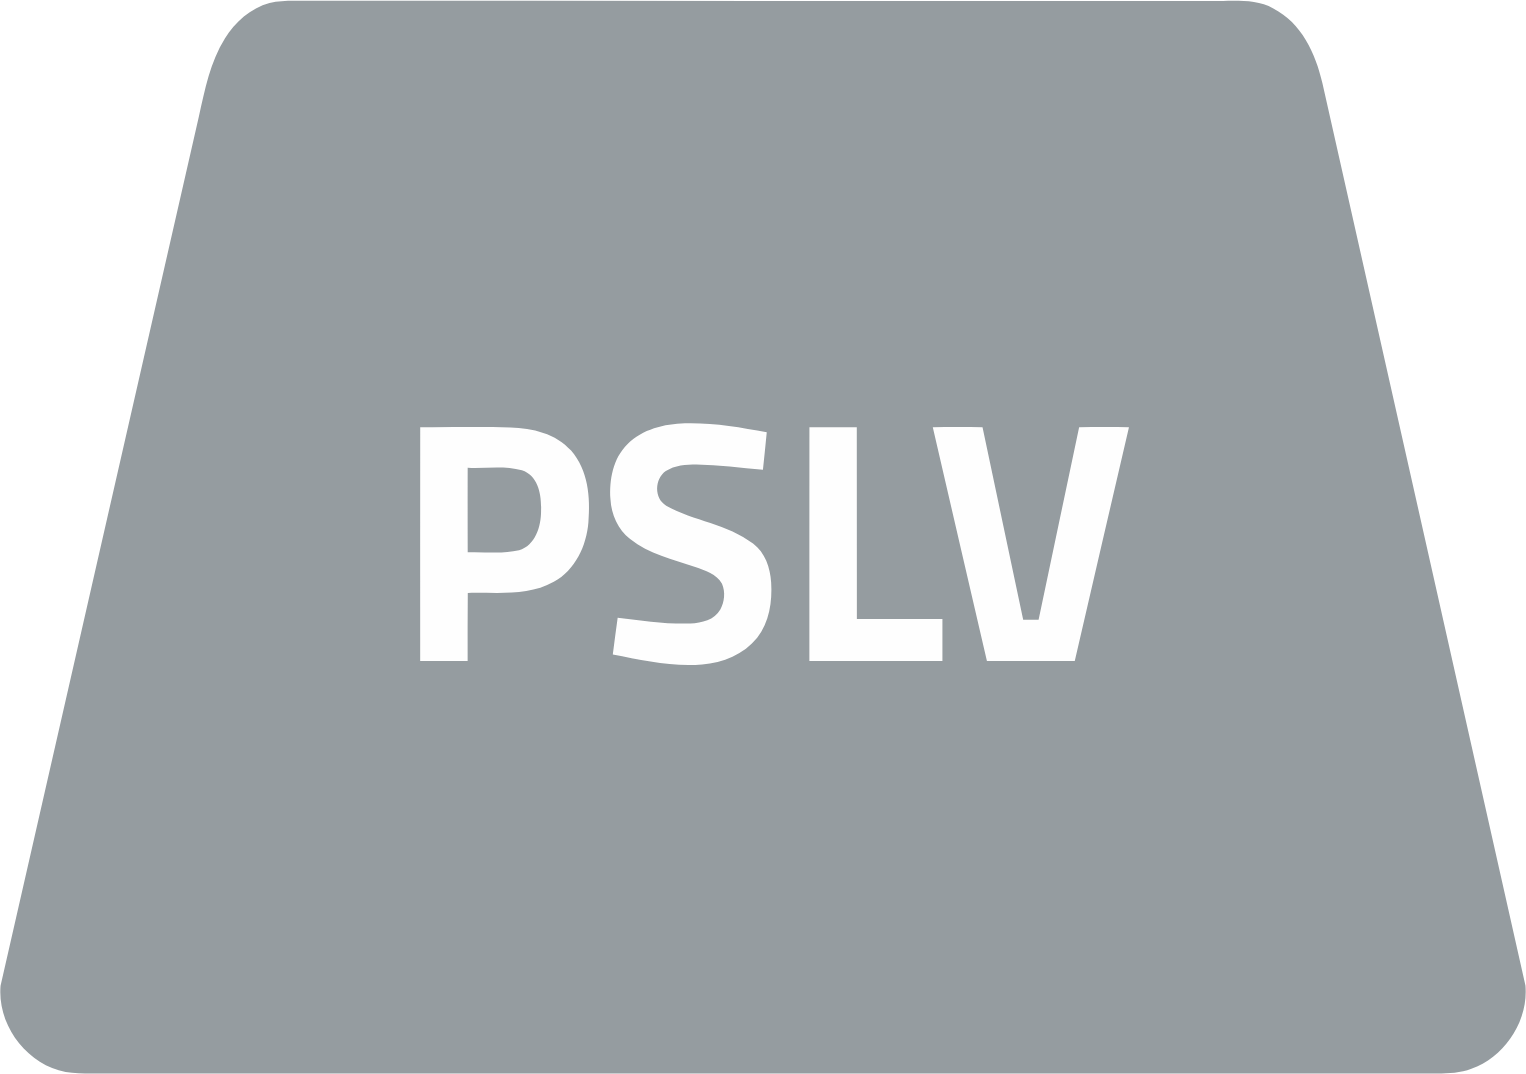 Sprott Physical Silver Trust (PSLV) logo (PNG transparent)